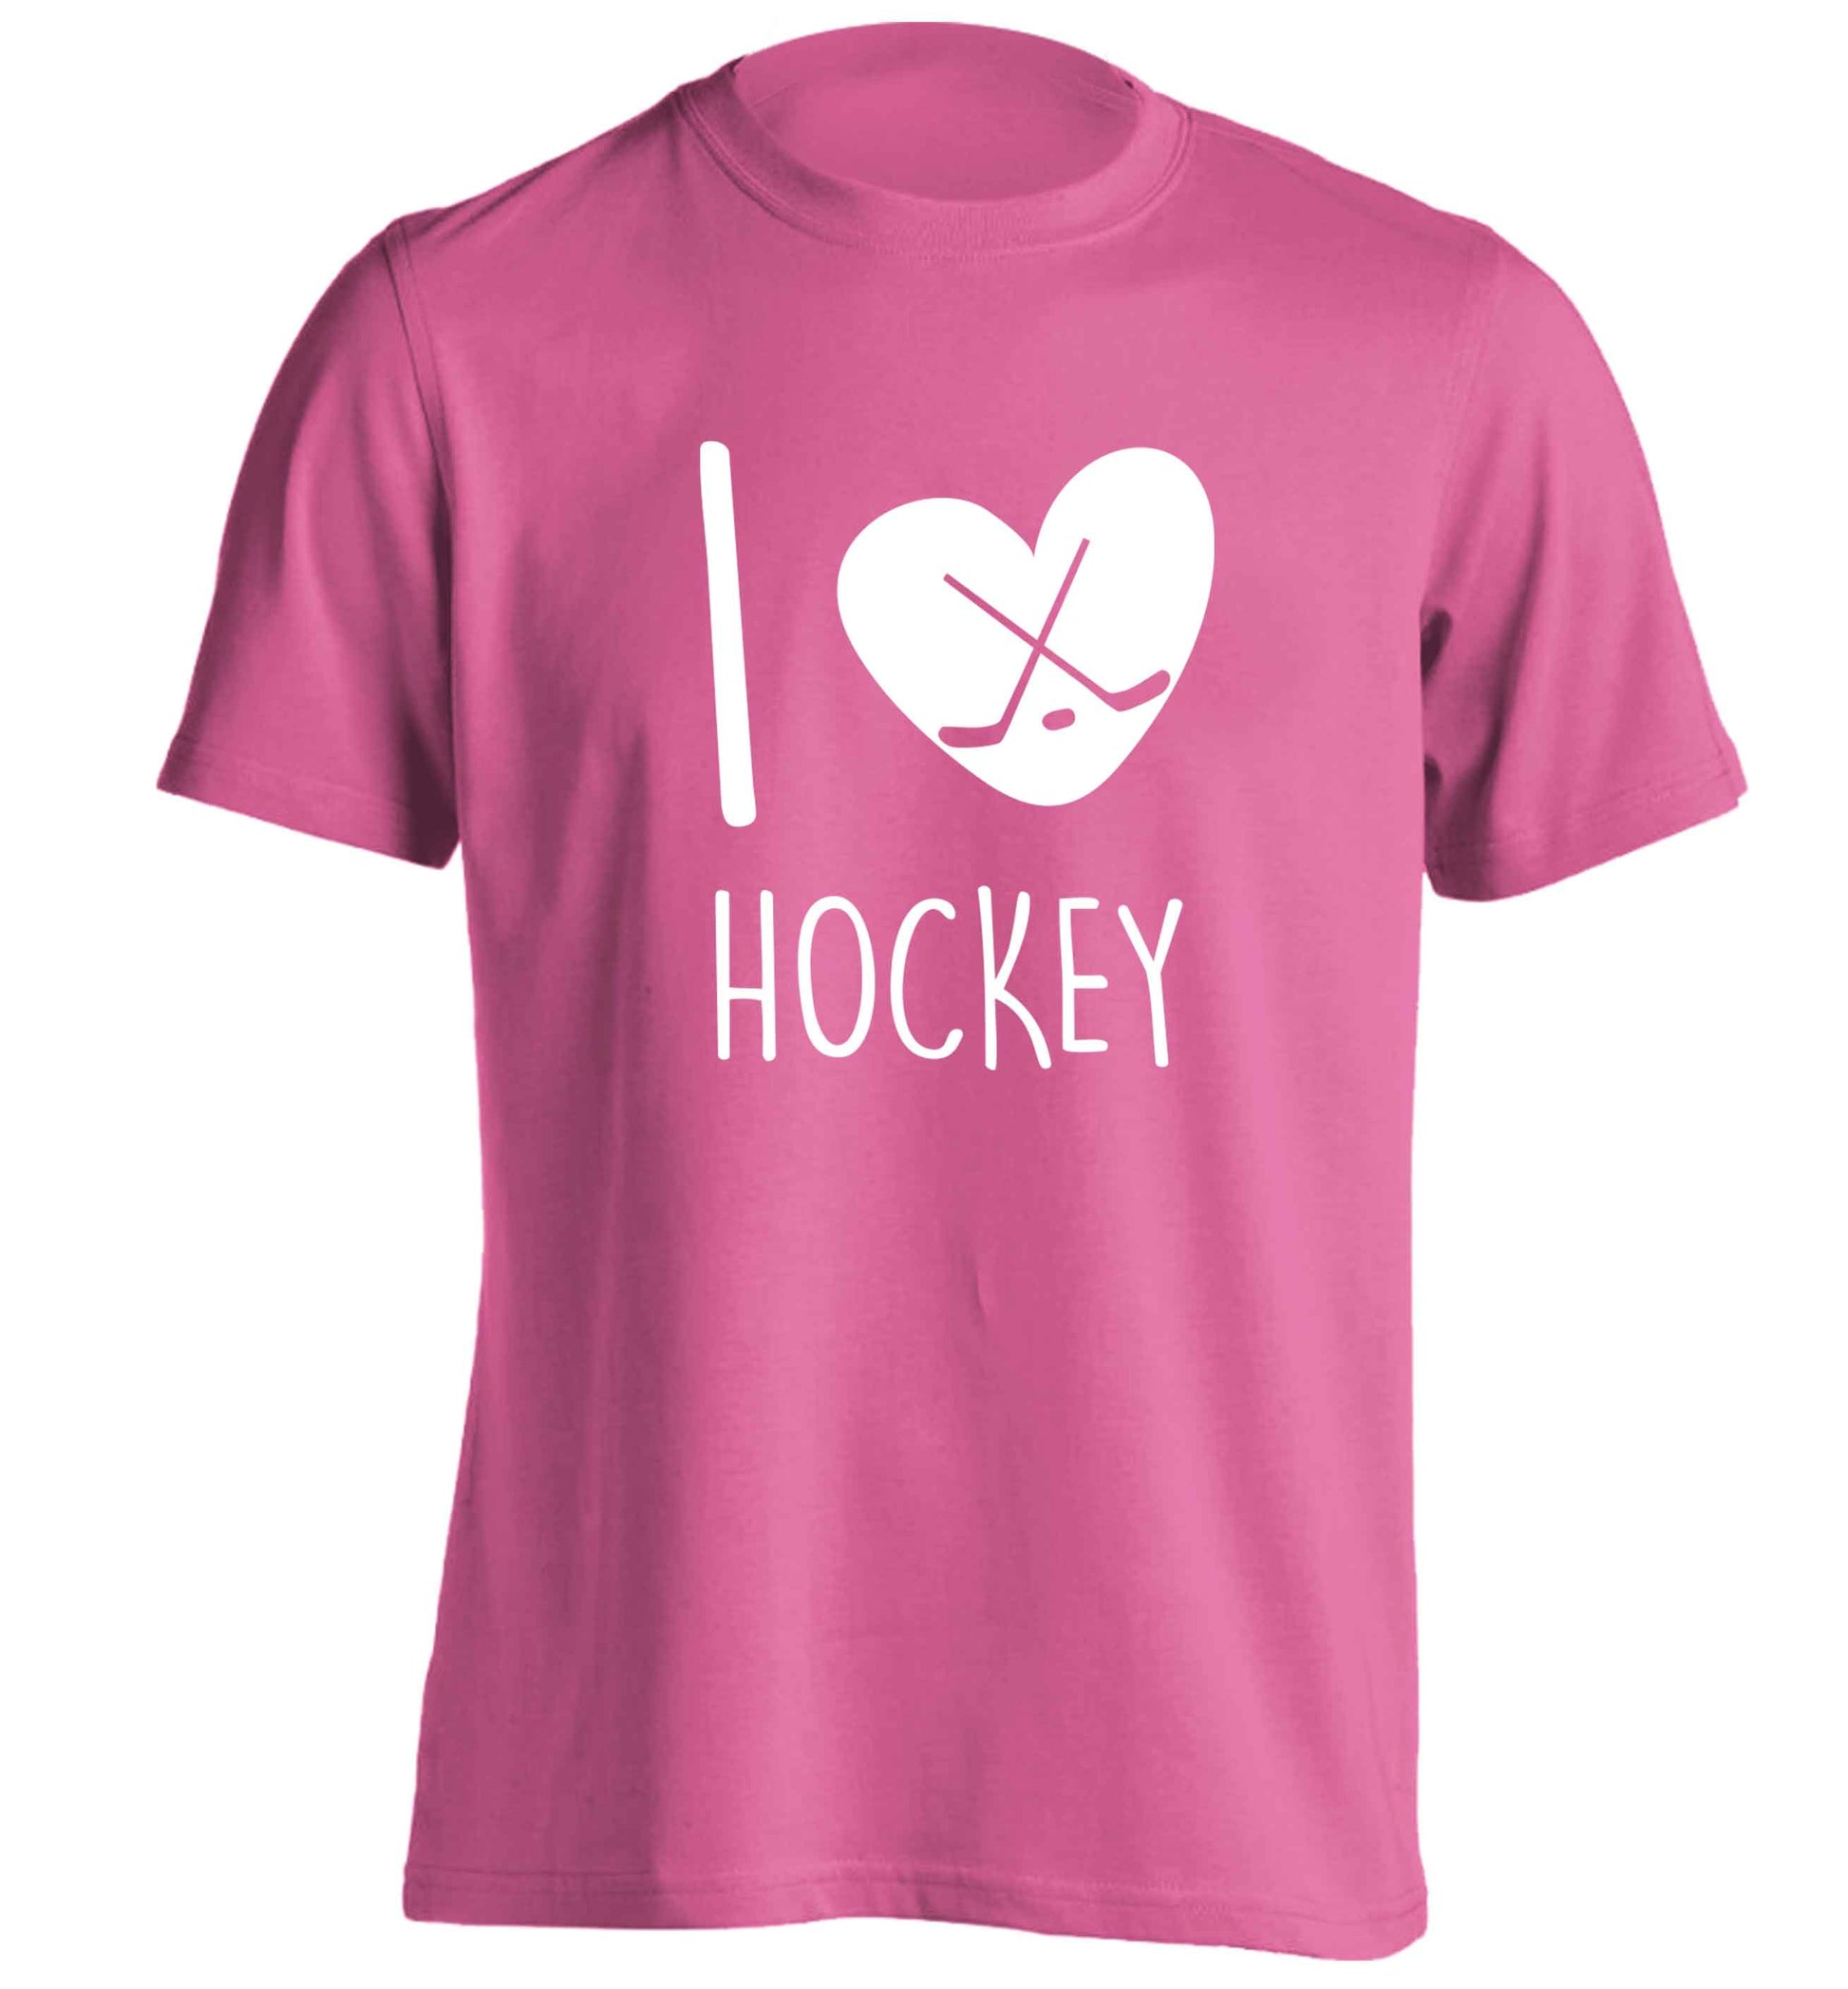 I love hockey adults unisex pink Tshirt 2XL